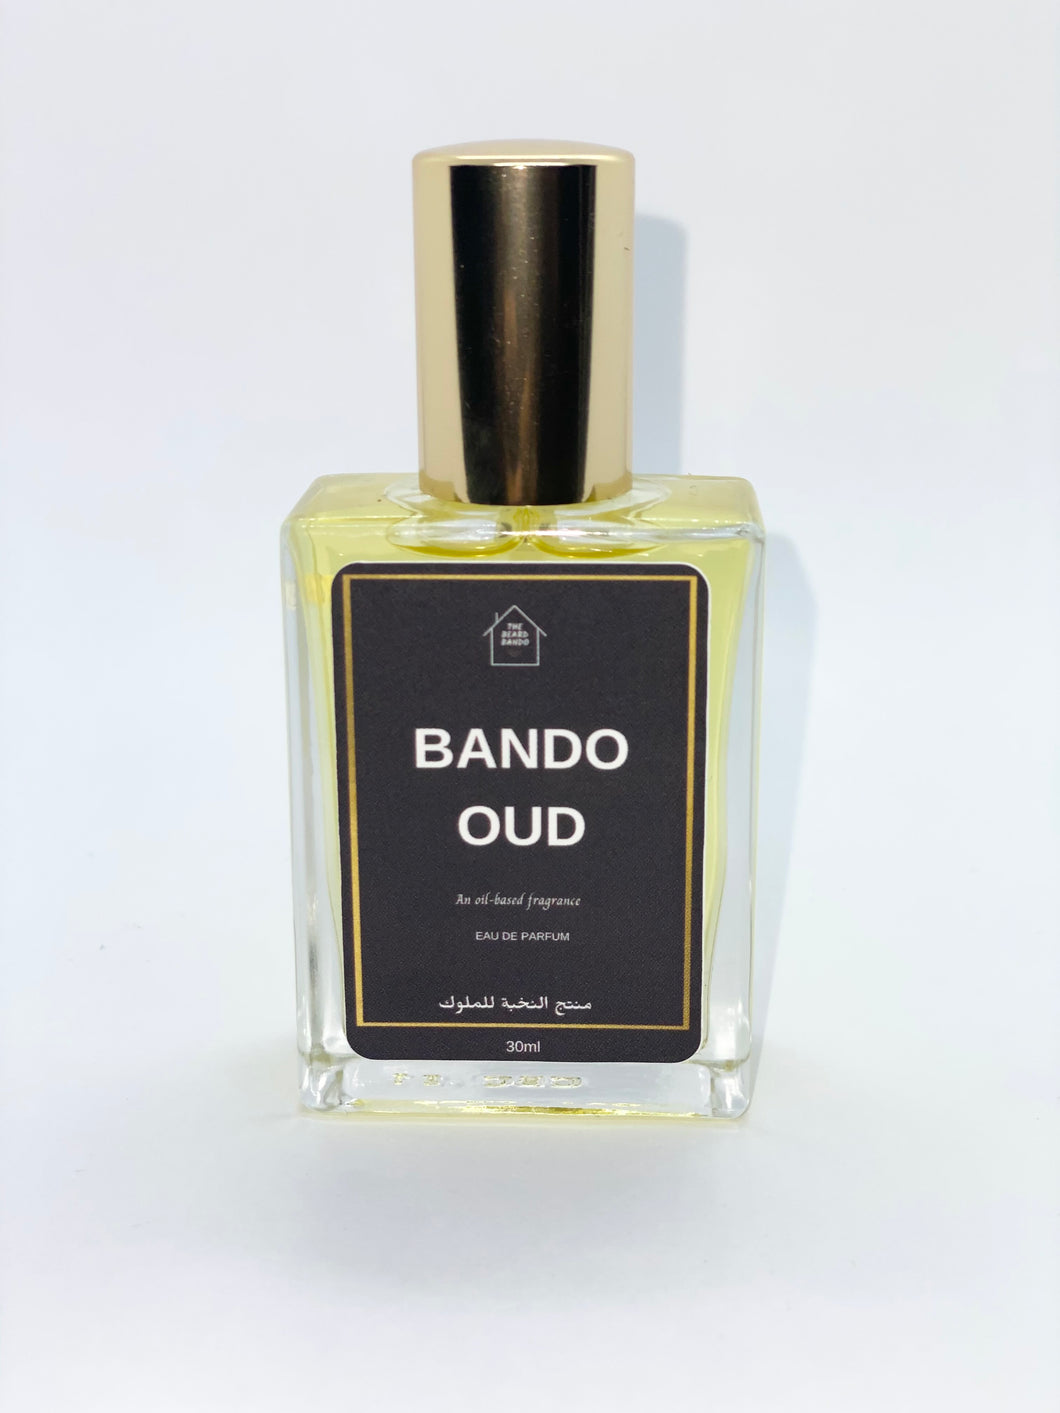 “Orchid” Bando Oud by the Beard Bando